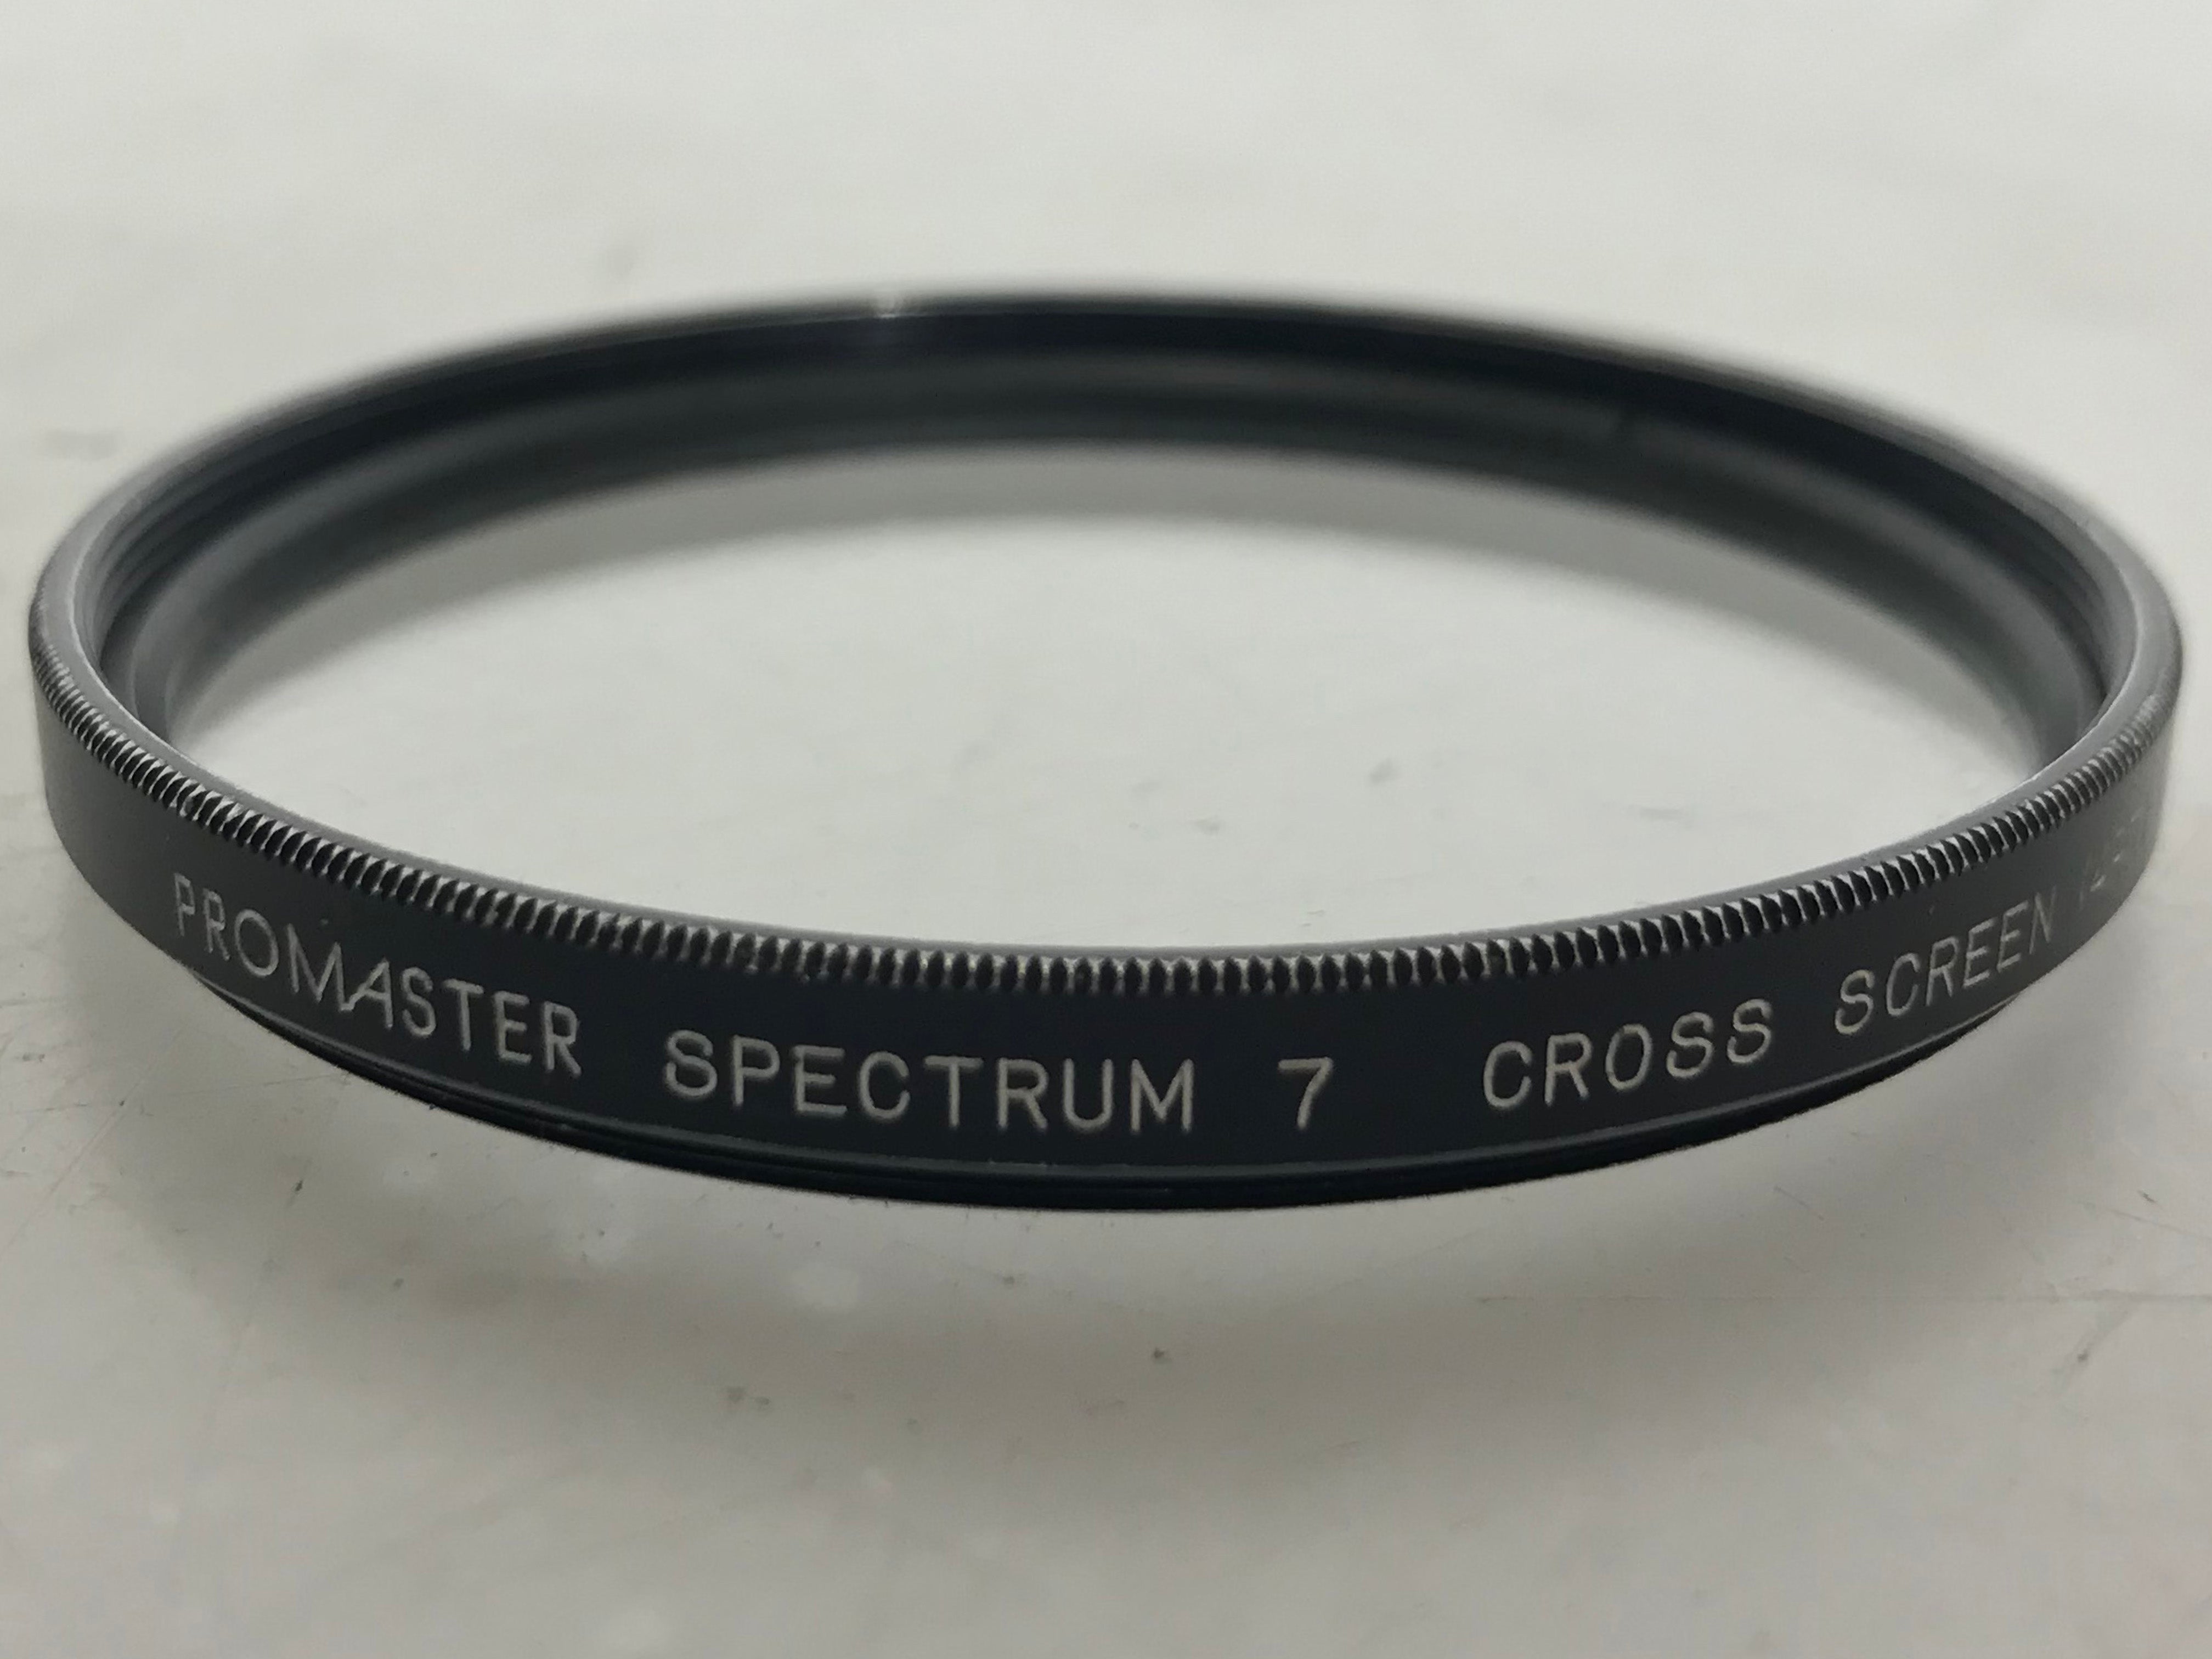 ProMaster 62mm Spectrum 7 Cross Screen (4PT) Filter Lens